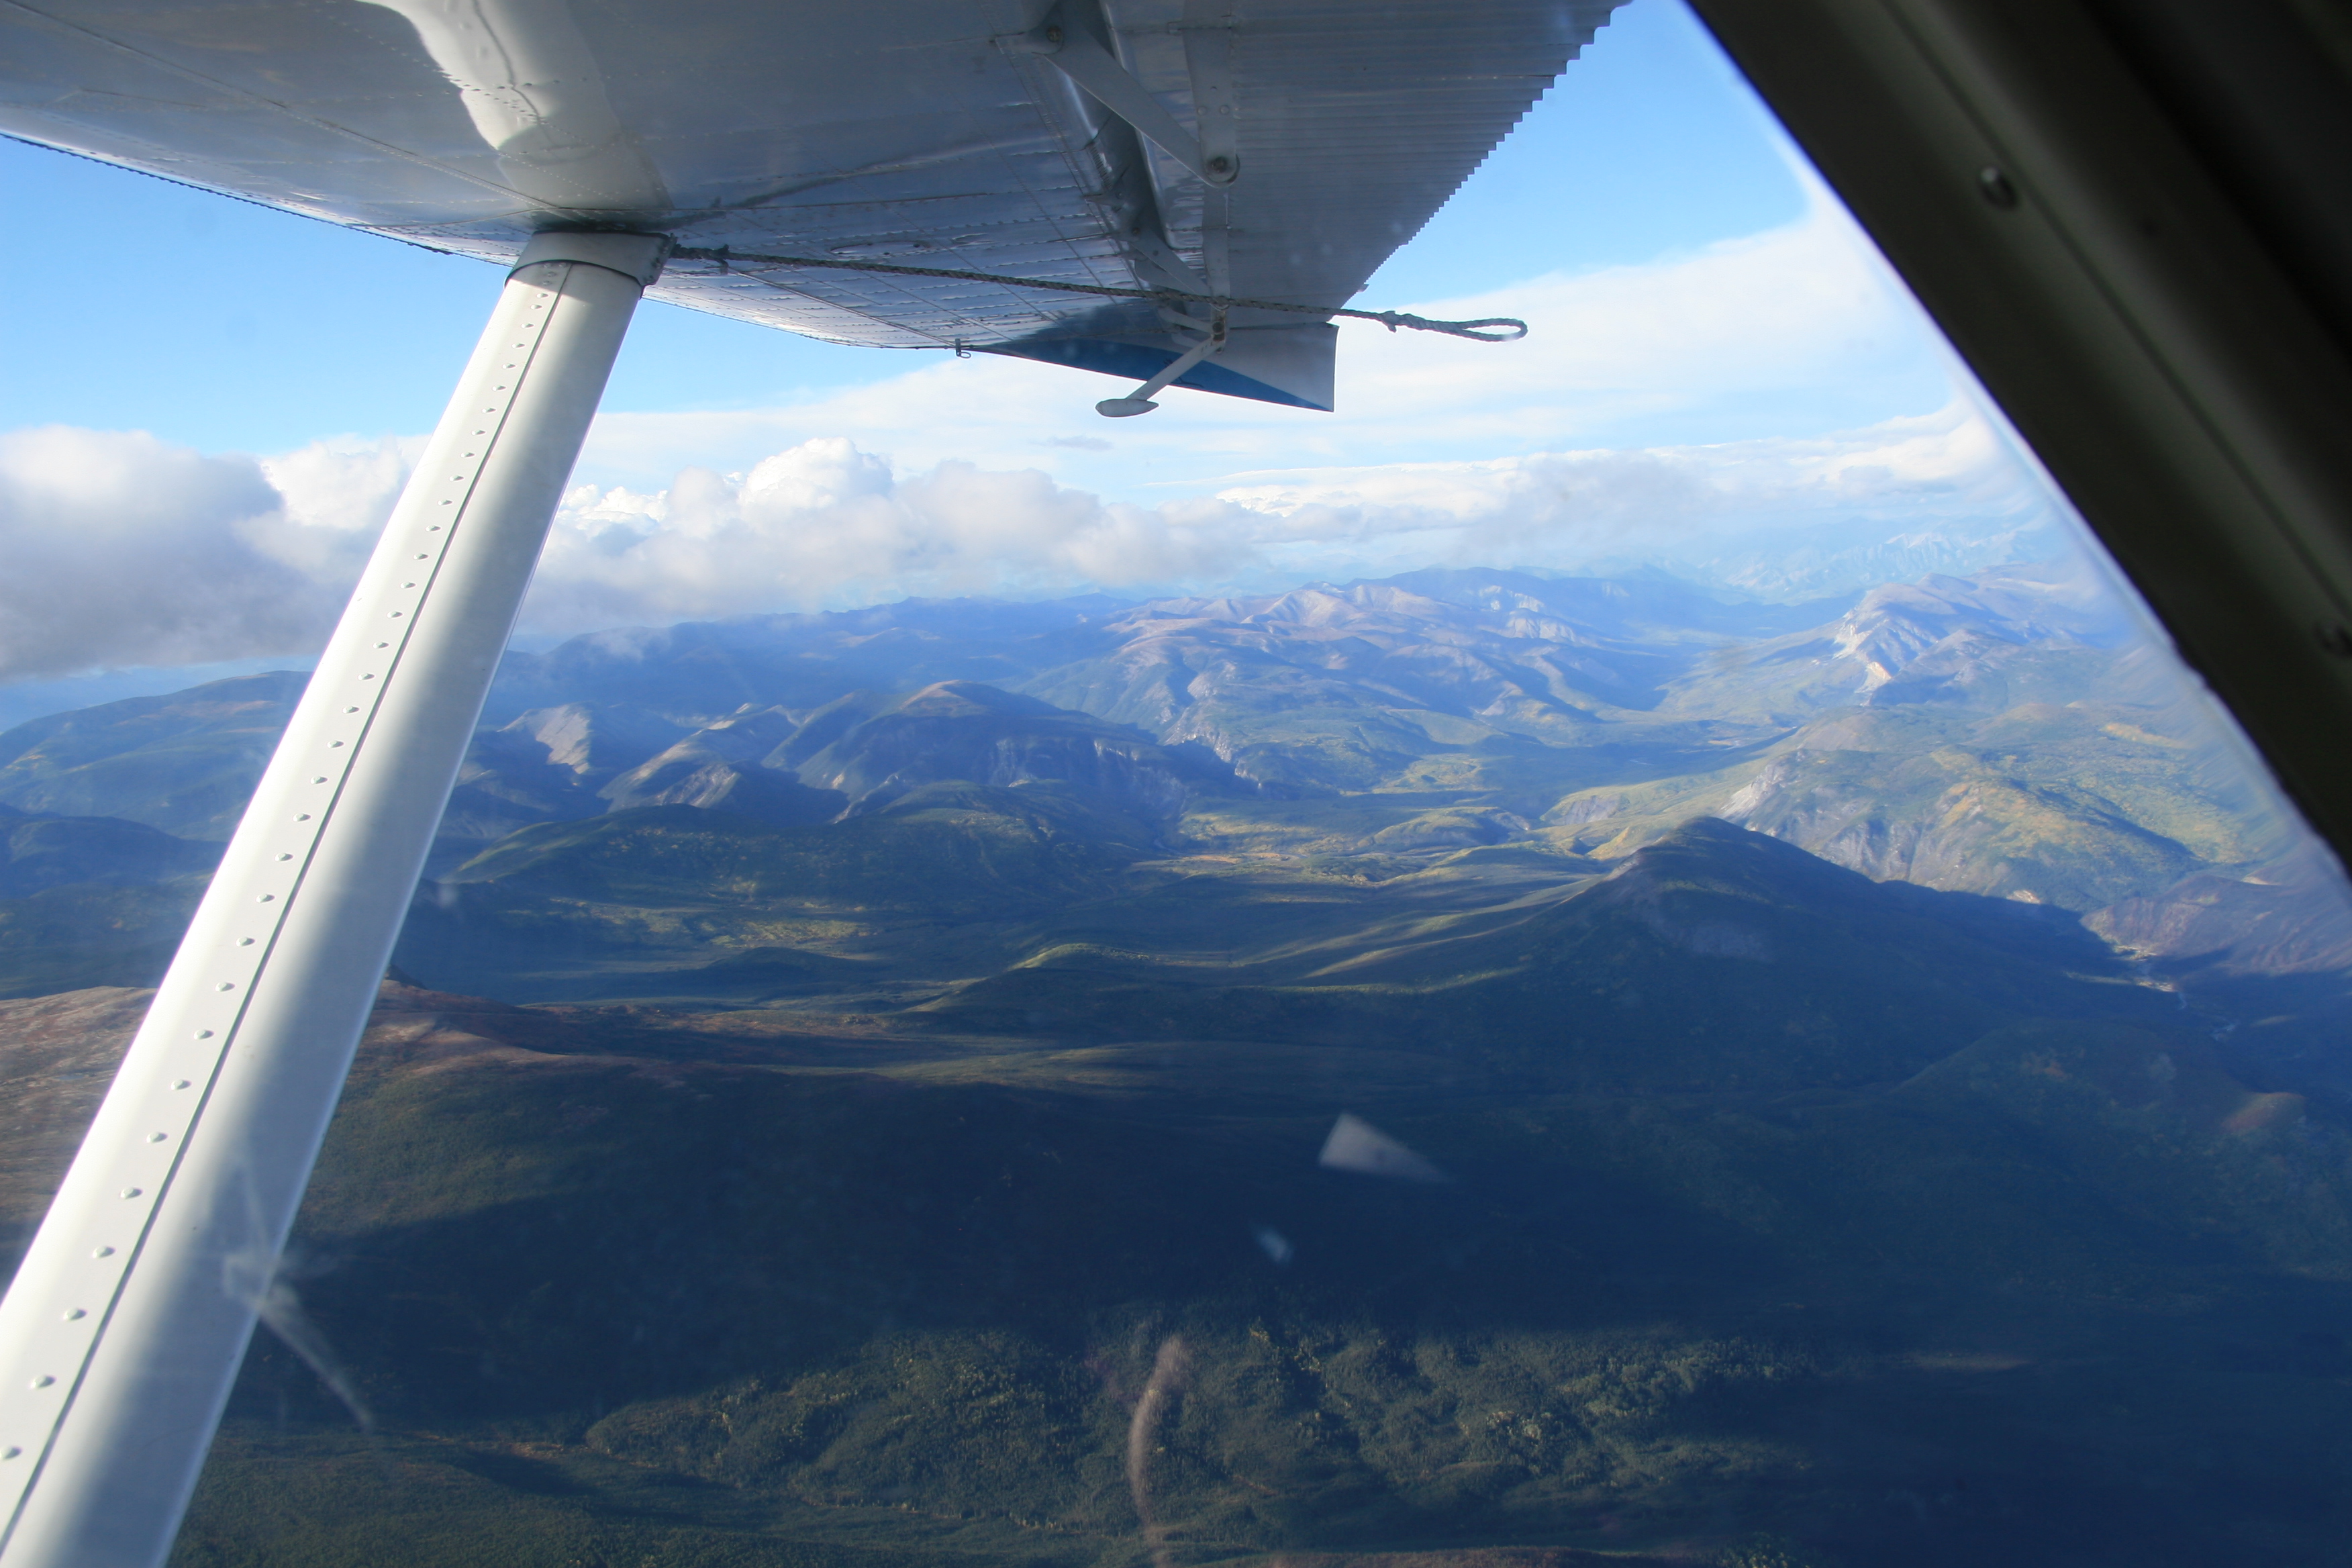 Canada B.C. Cassiar mountains 2014